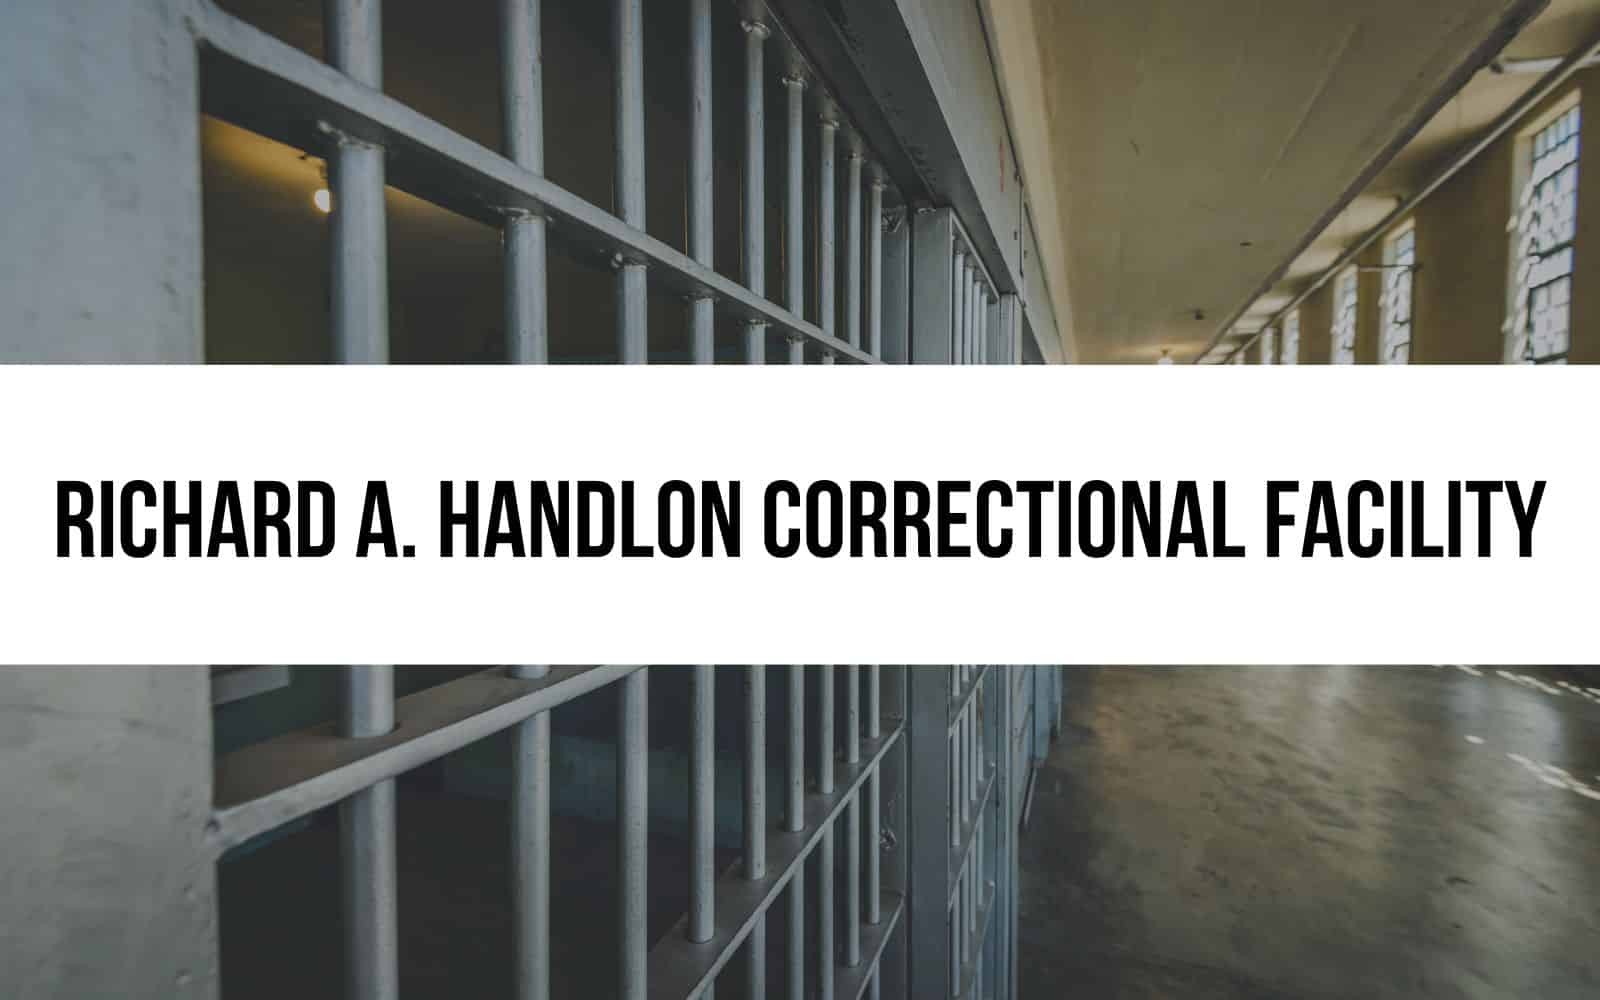 Richard A. Handlon Correctional Facility